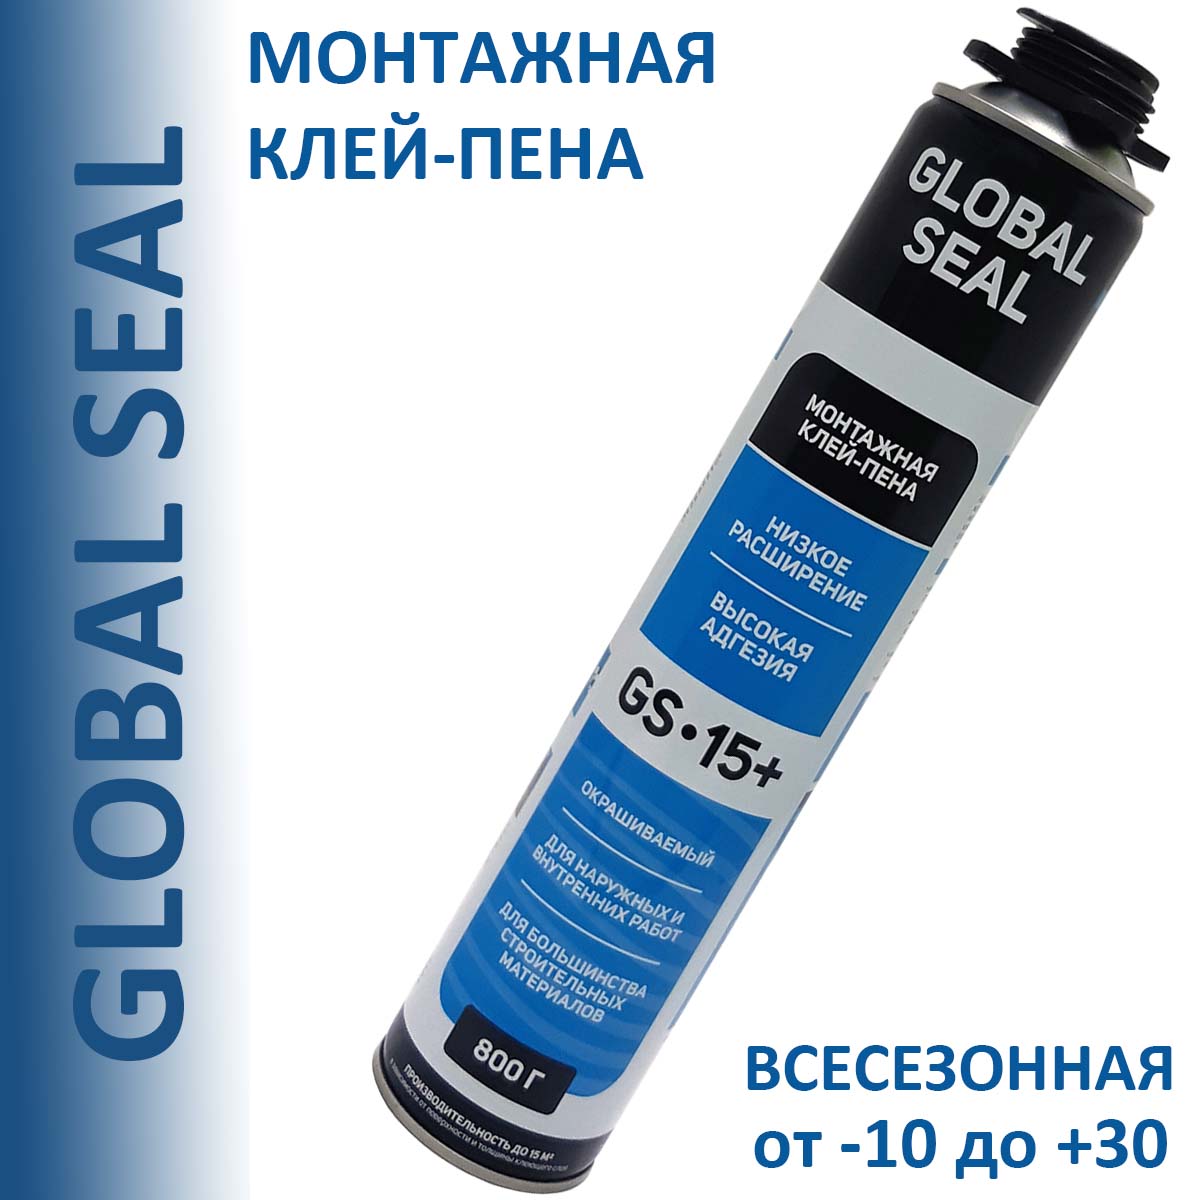 Клей-пена Монтажная Global Seal GS-15, всесезонная, 800 гр.